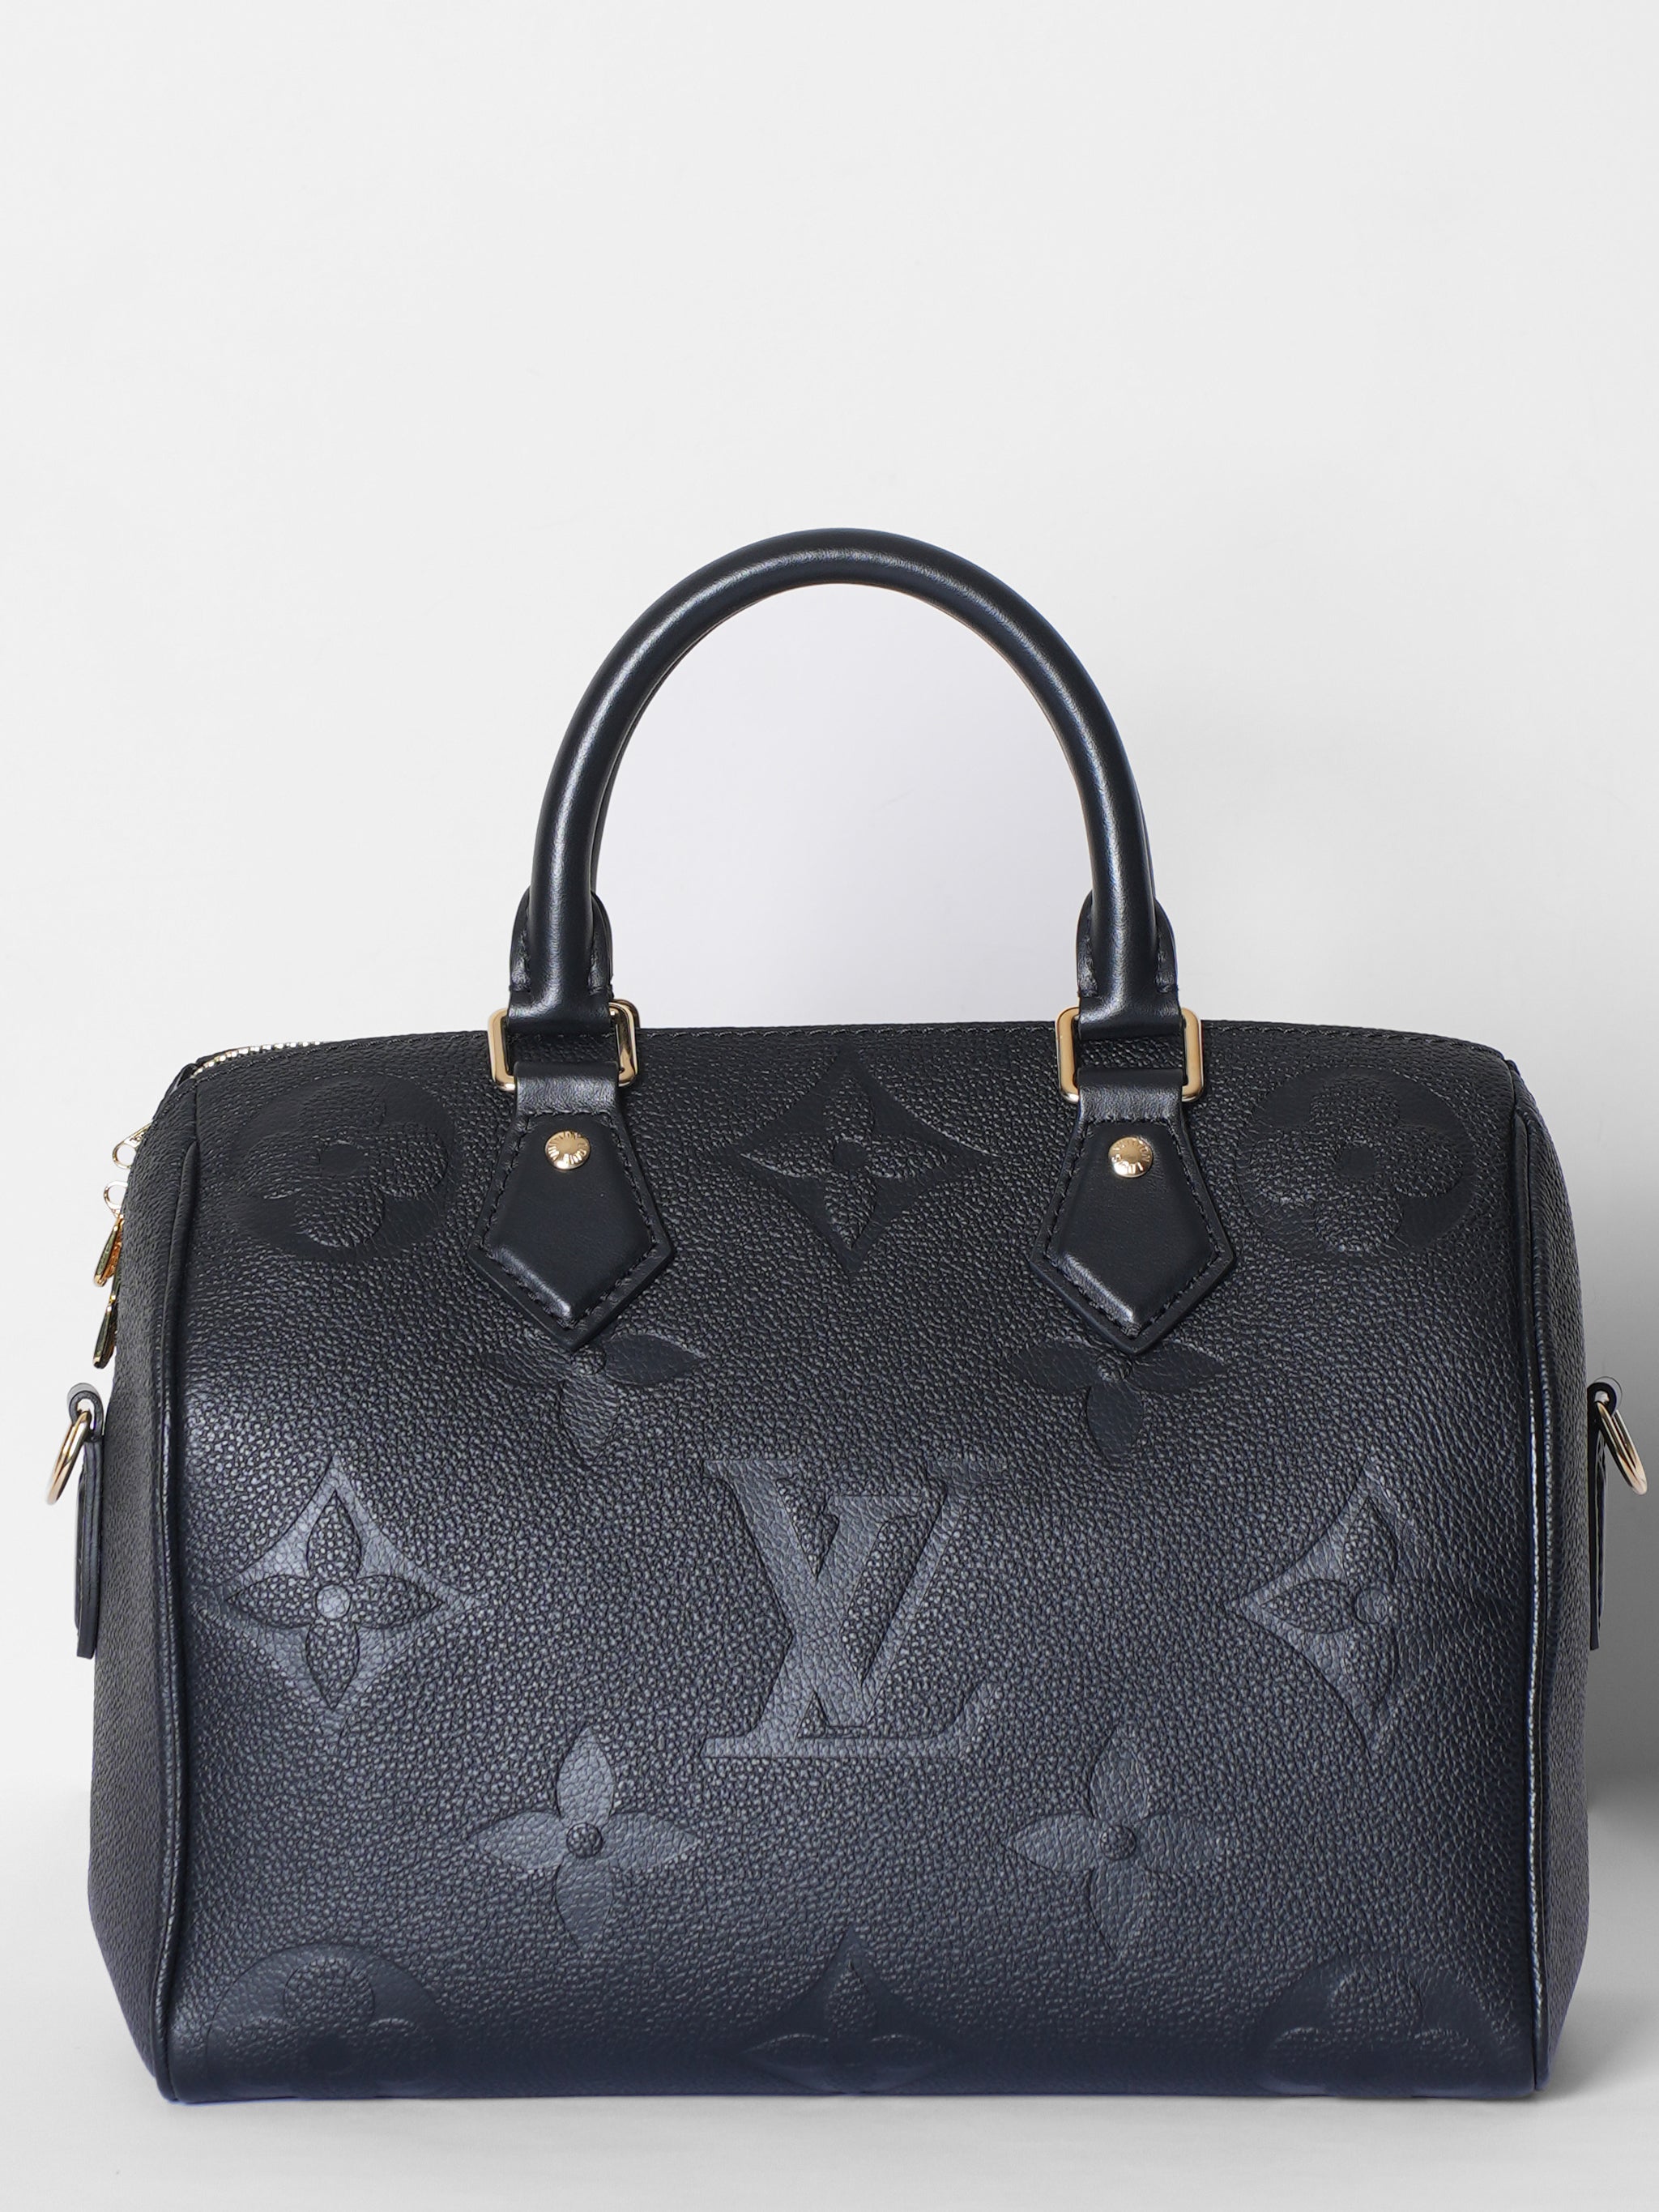 New Louis Vuitton Speedy Bandouliere 20 Bag